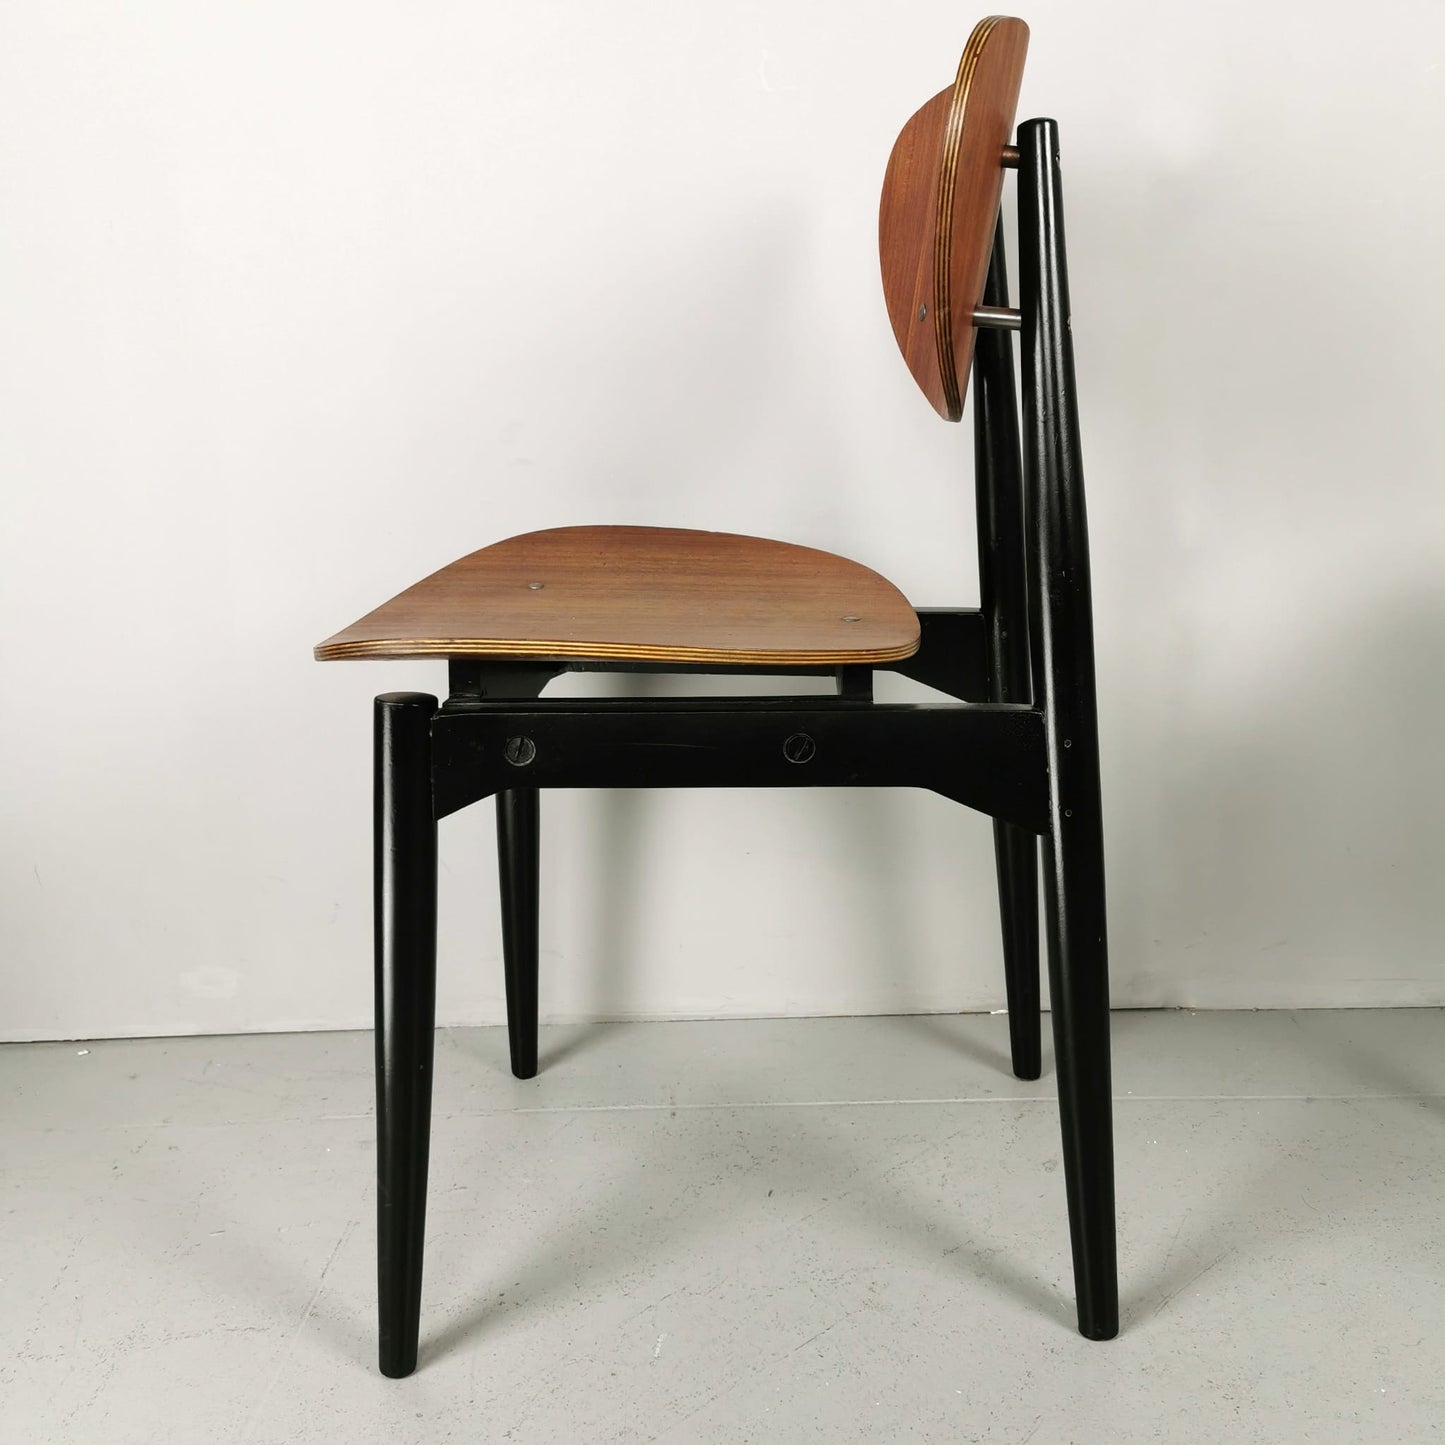 1950s Scandinavian Design Chairs (set of 4)